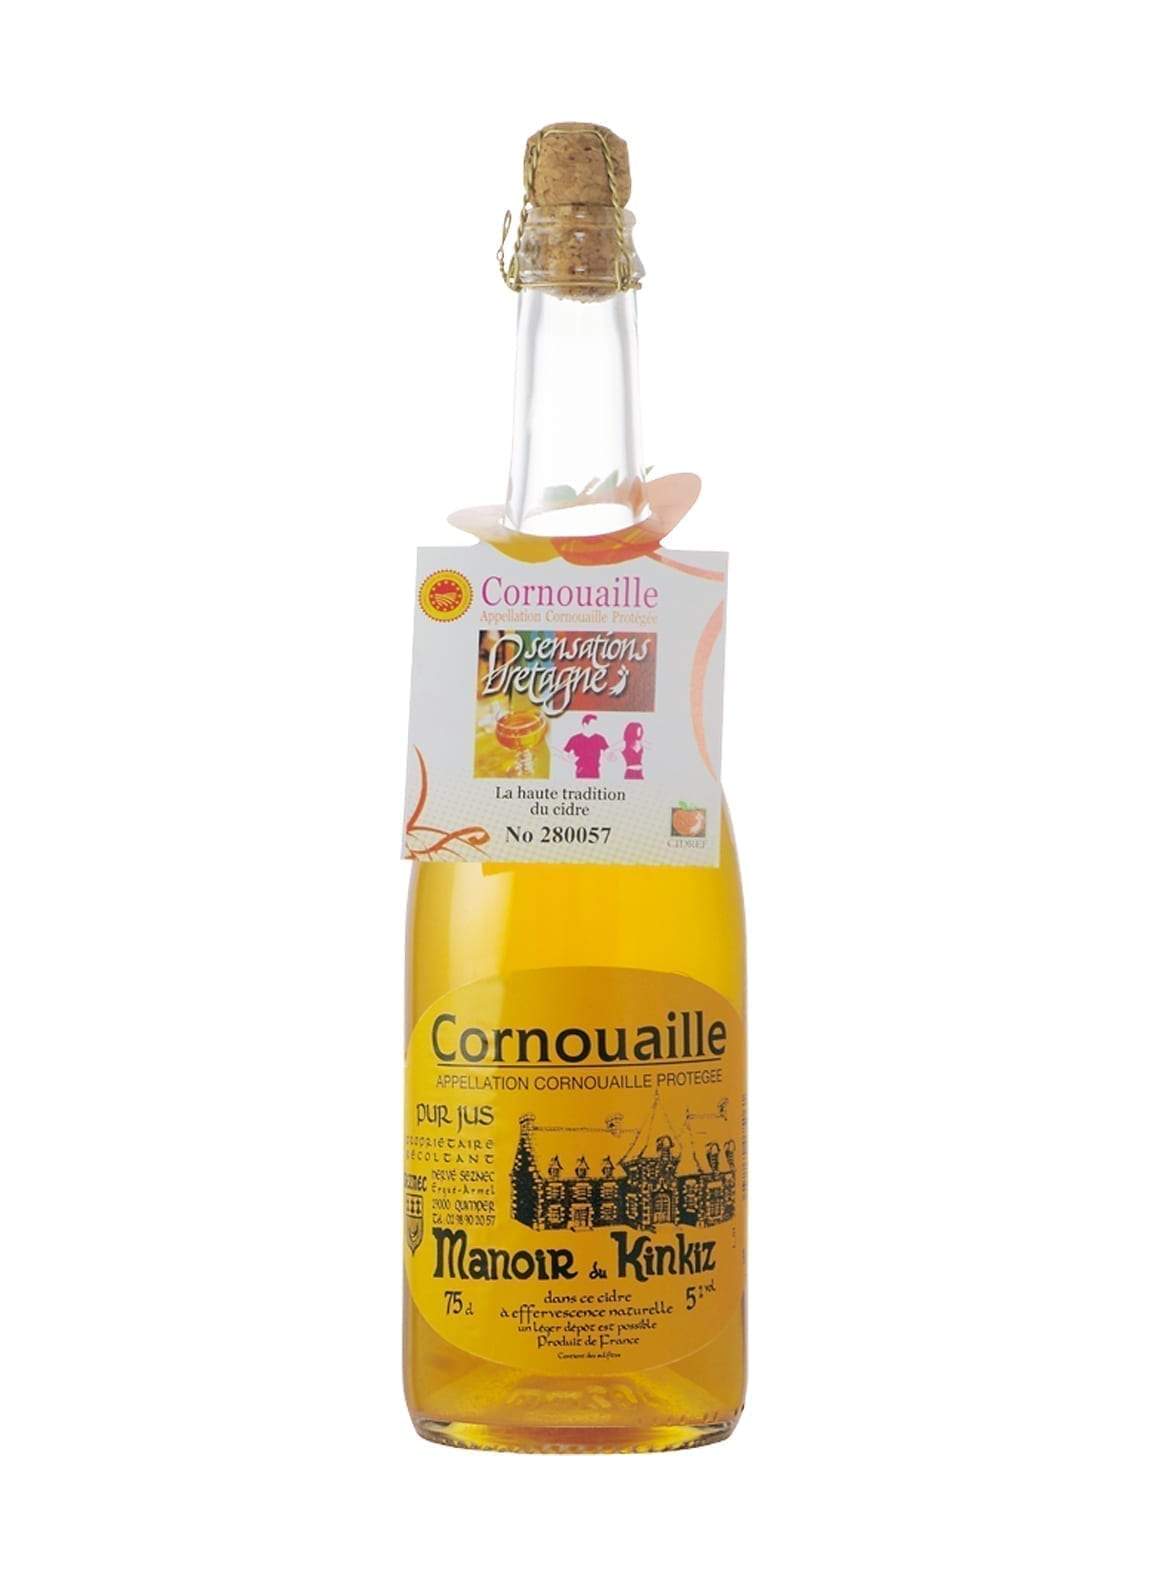 Manoir Kinkiz Cidre 'Cornouaille' (dry apple cider) 5.5% 750ml | Hard Cider | Shop online at Spirits of France